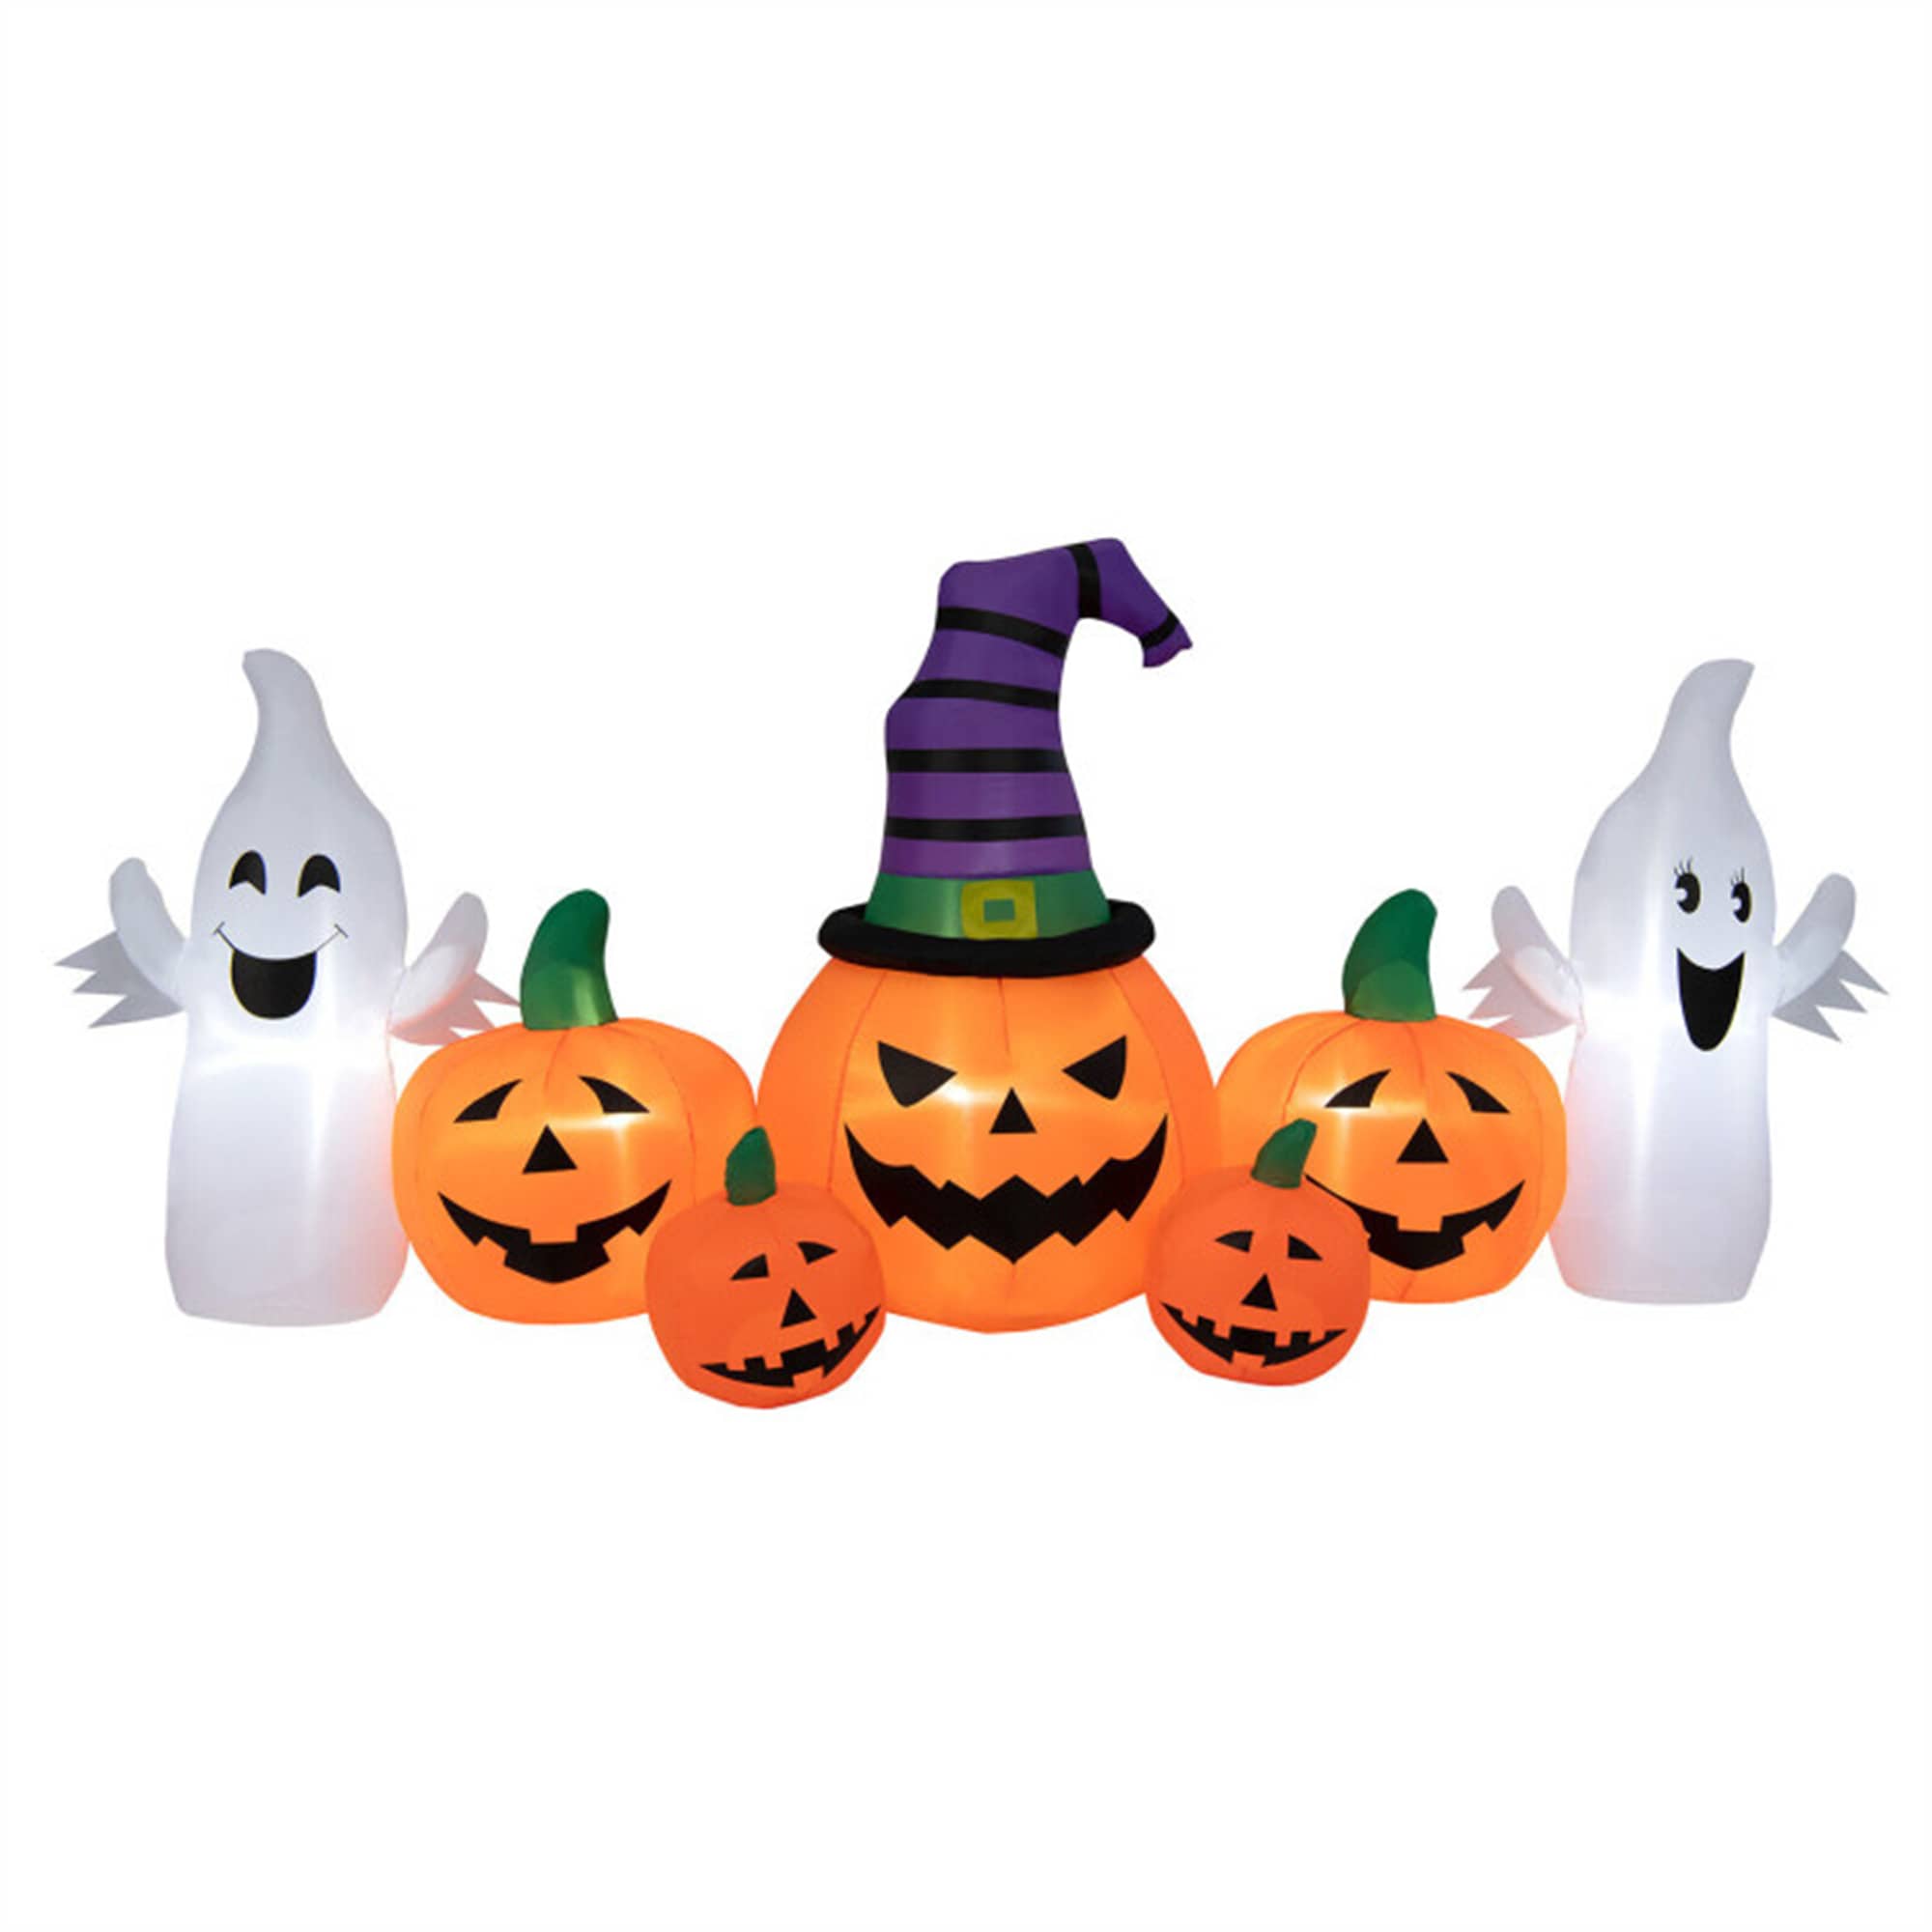 CASAINC 9 Feet Long Halloween Inflatable Pumpkins with 2 Ghosts